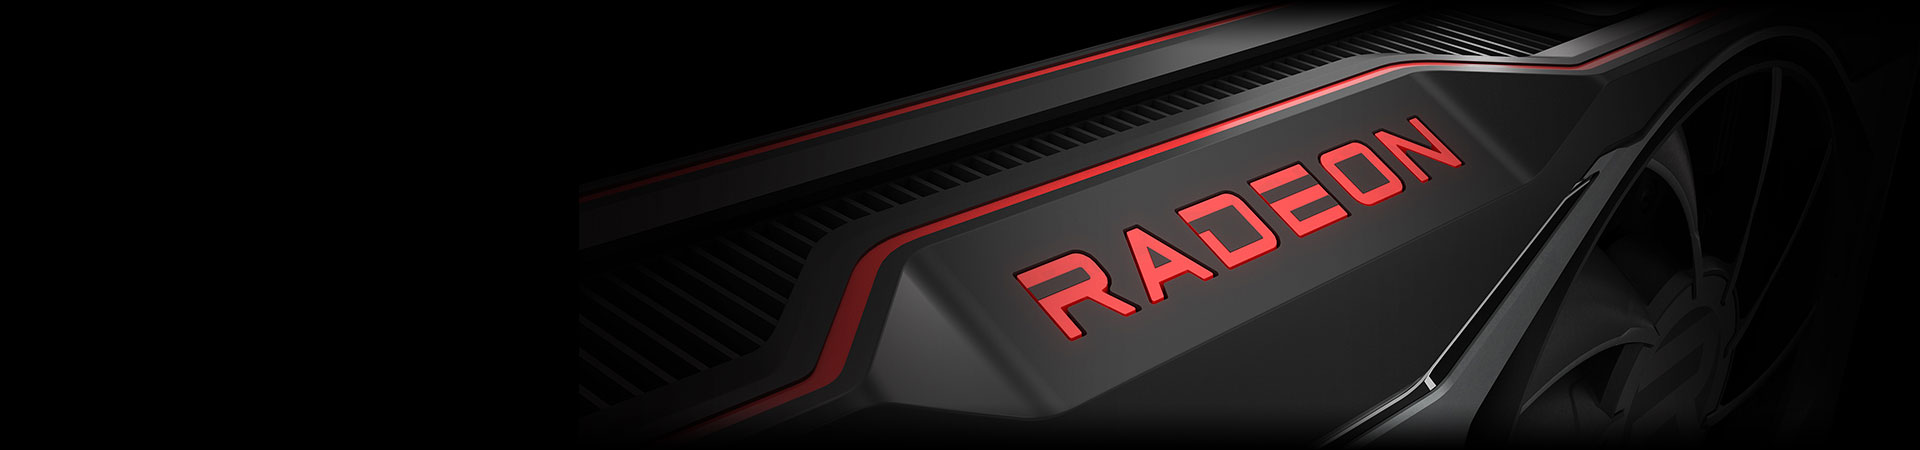 Radeon RX 6700 XT GAMING X 12G